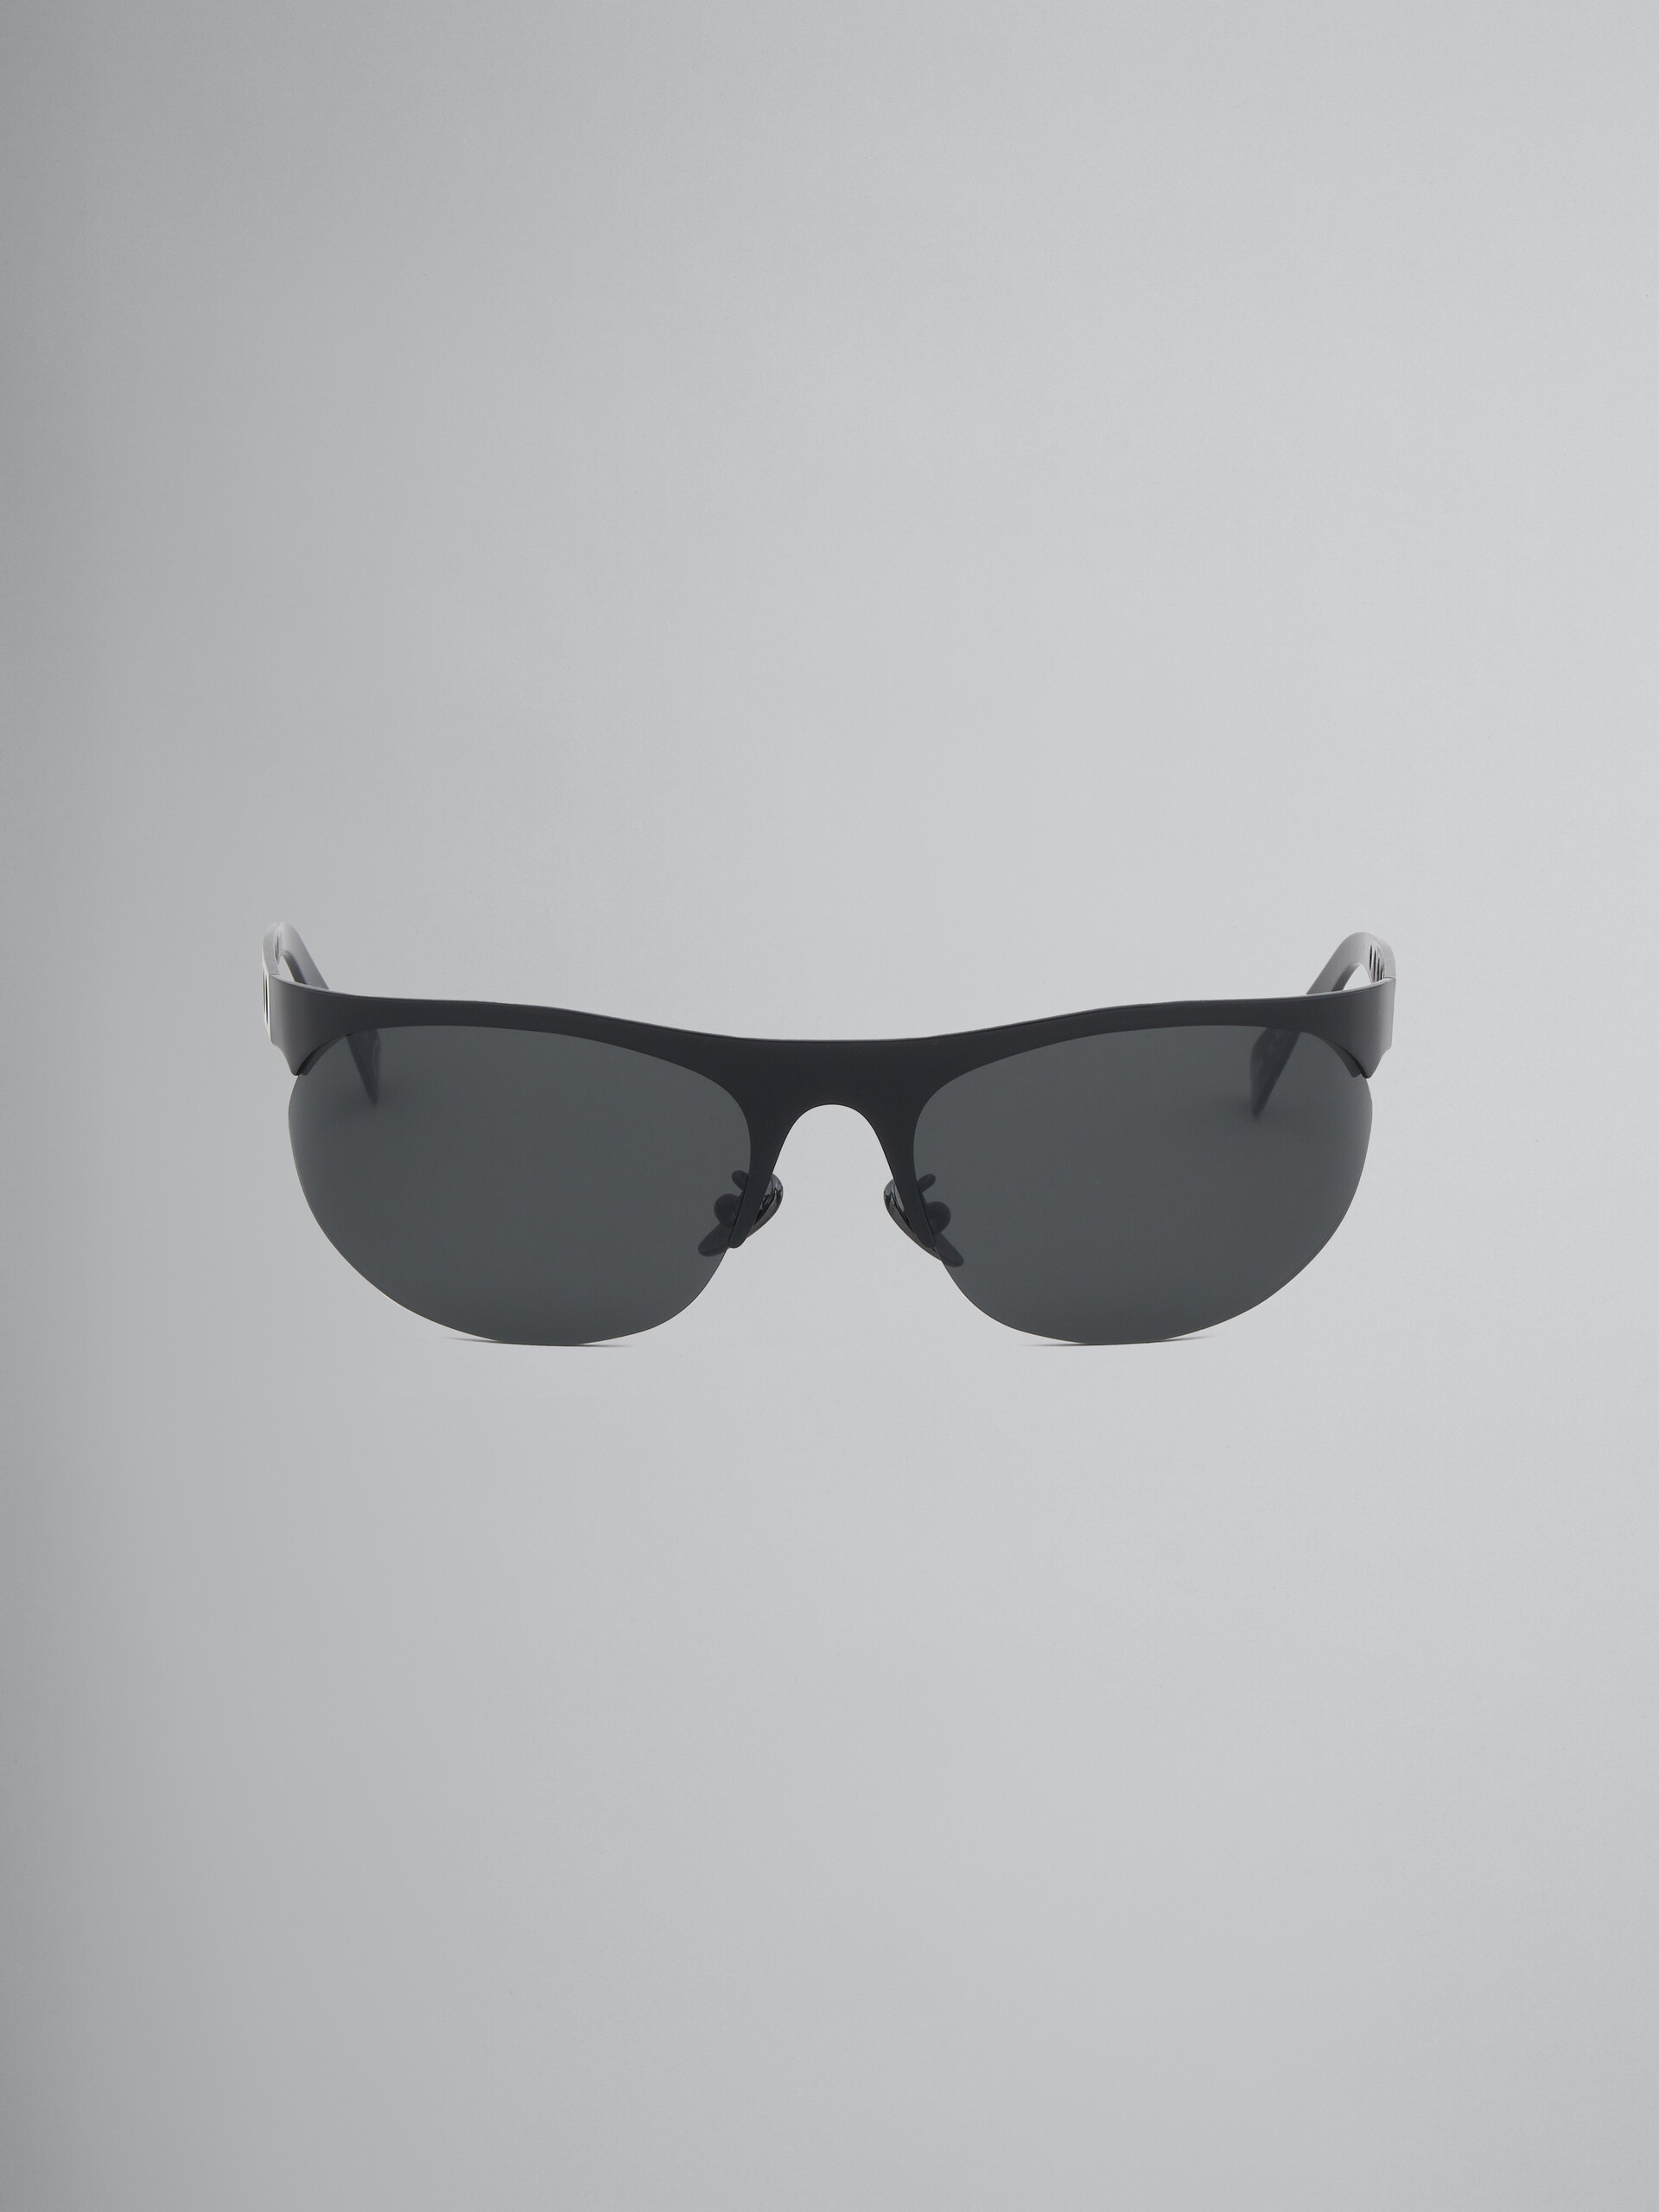 Black Salar De Uyuni metal sunglasses - Optical - Image 1